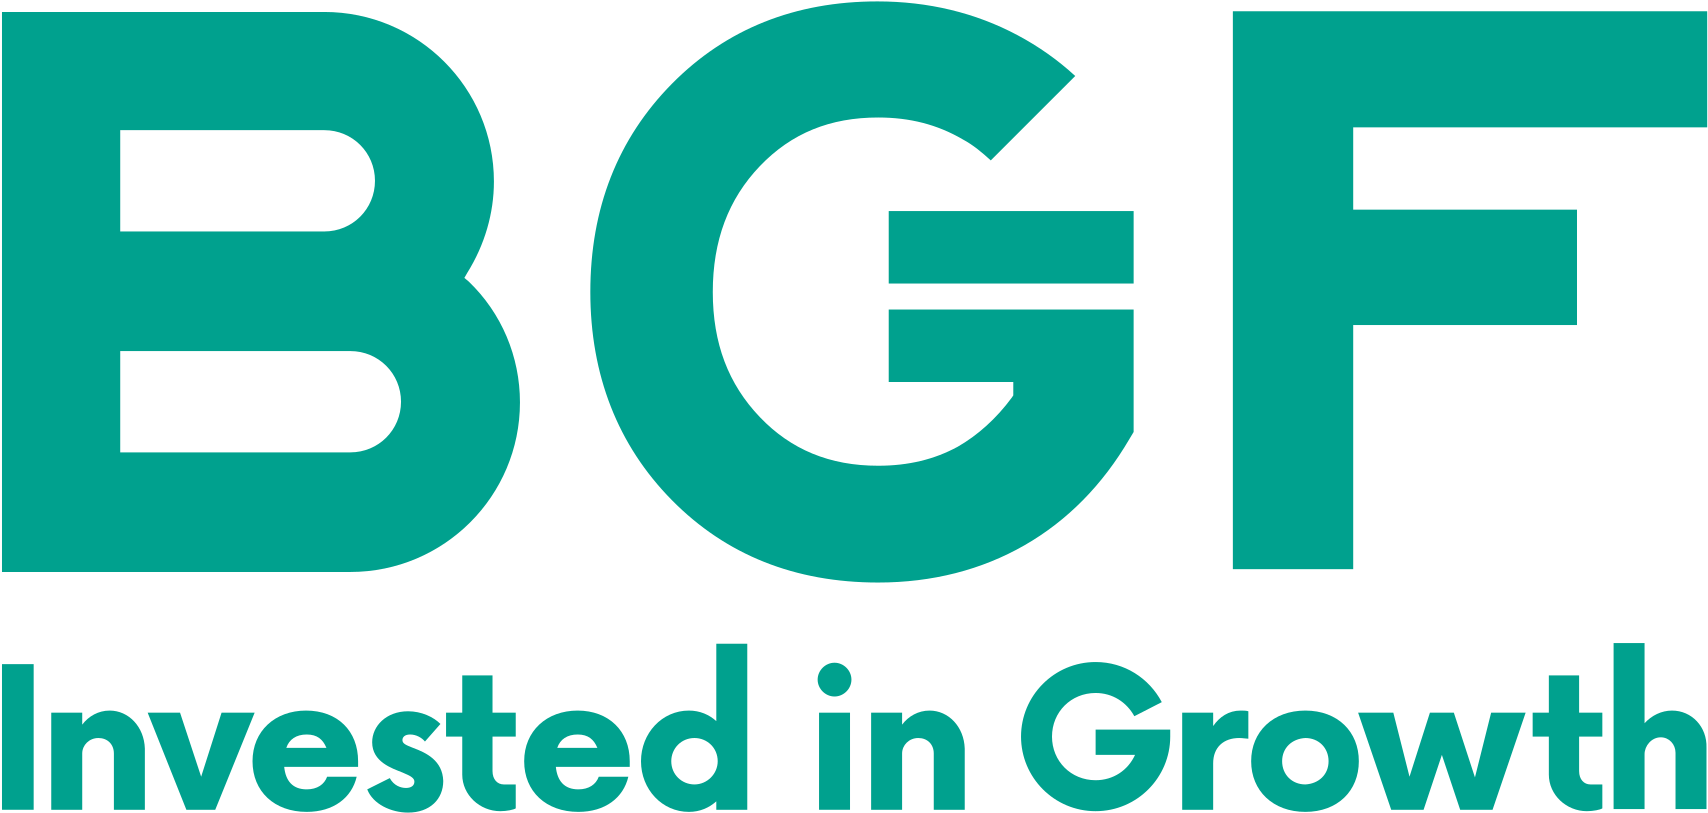 Bgf Master - Svg - Tenner Challenge Logo (2000x1056)